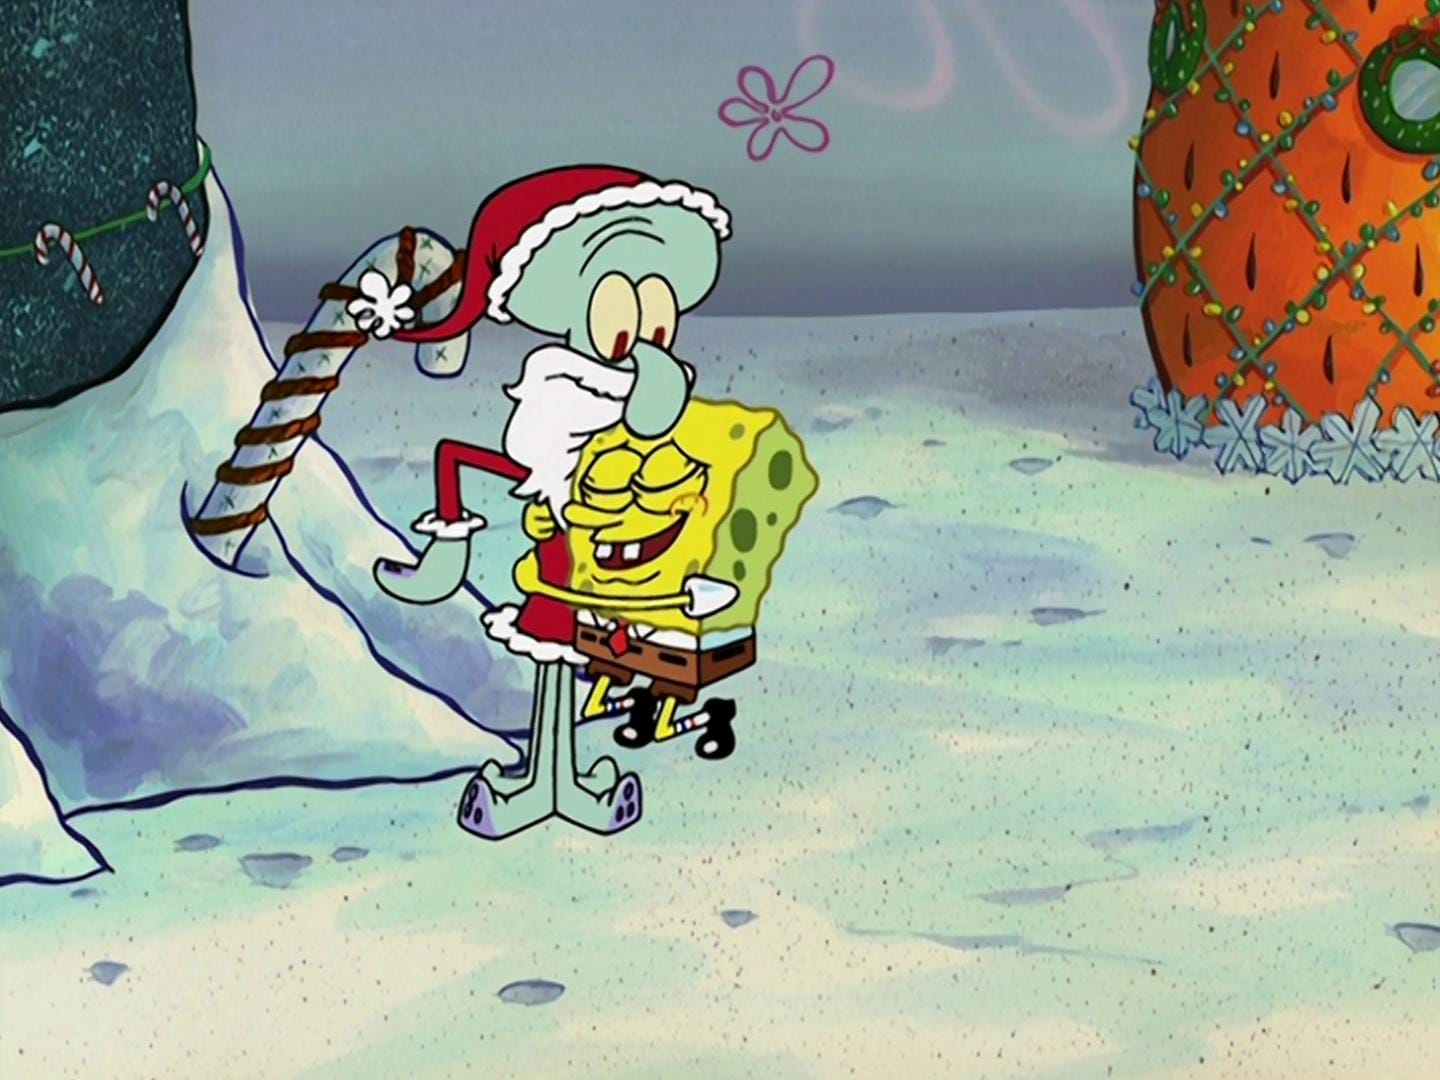 SpongeBob SquarePants&quot; Christmas Who? (TV Episode 2000) - IMDb